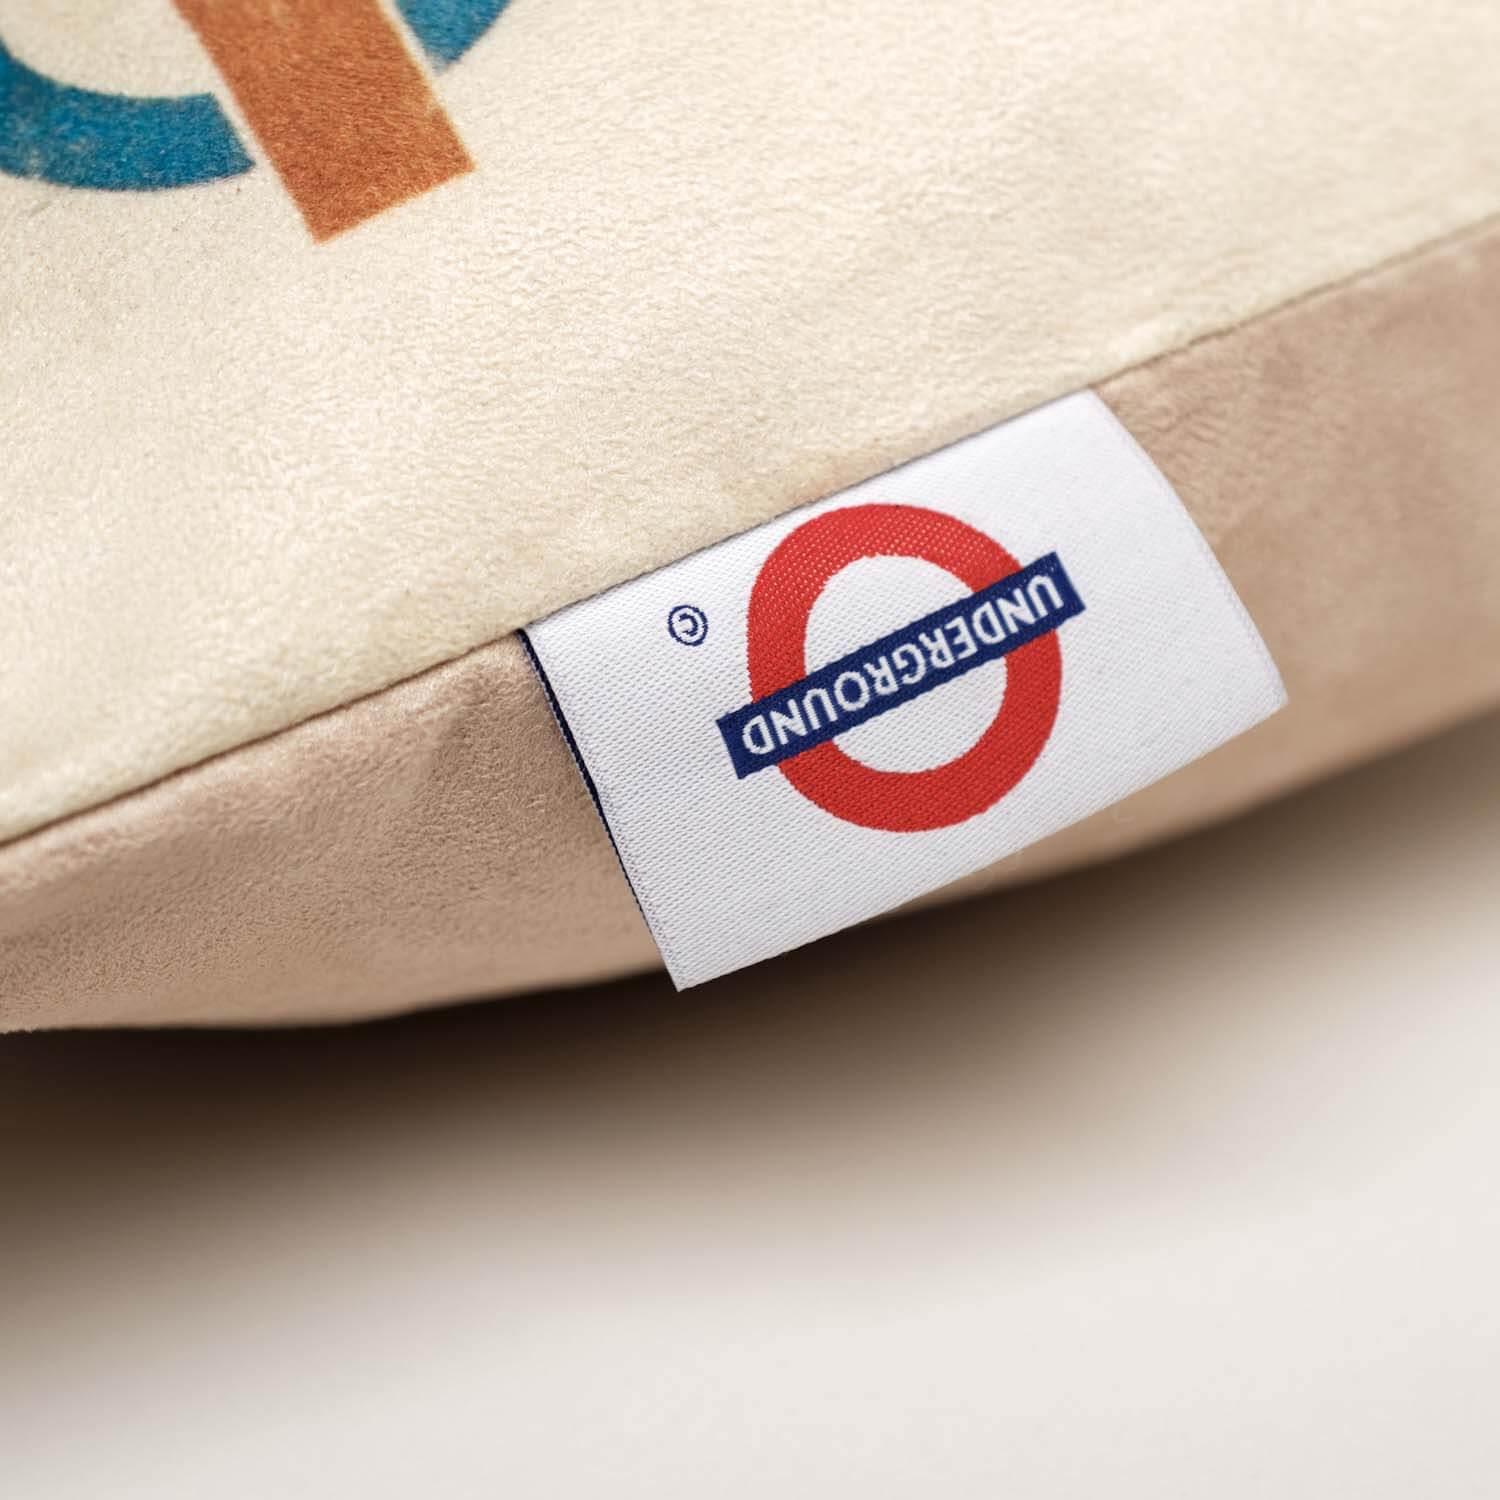 Windsor Route 81 - London Transport Cushion - Handmade Cushions UK - WeLoveCushions